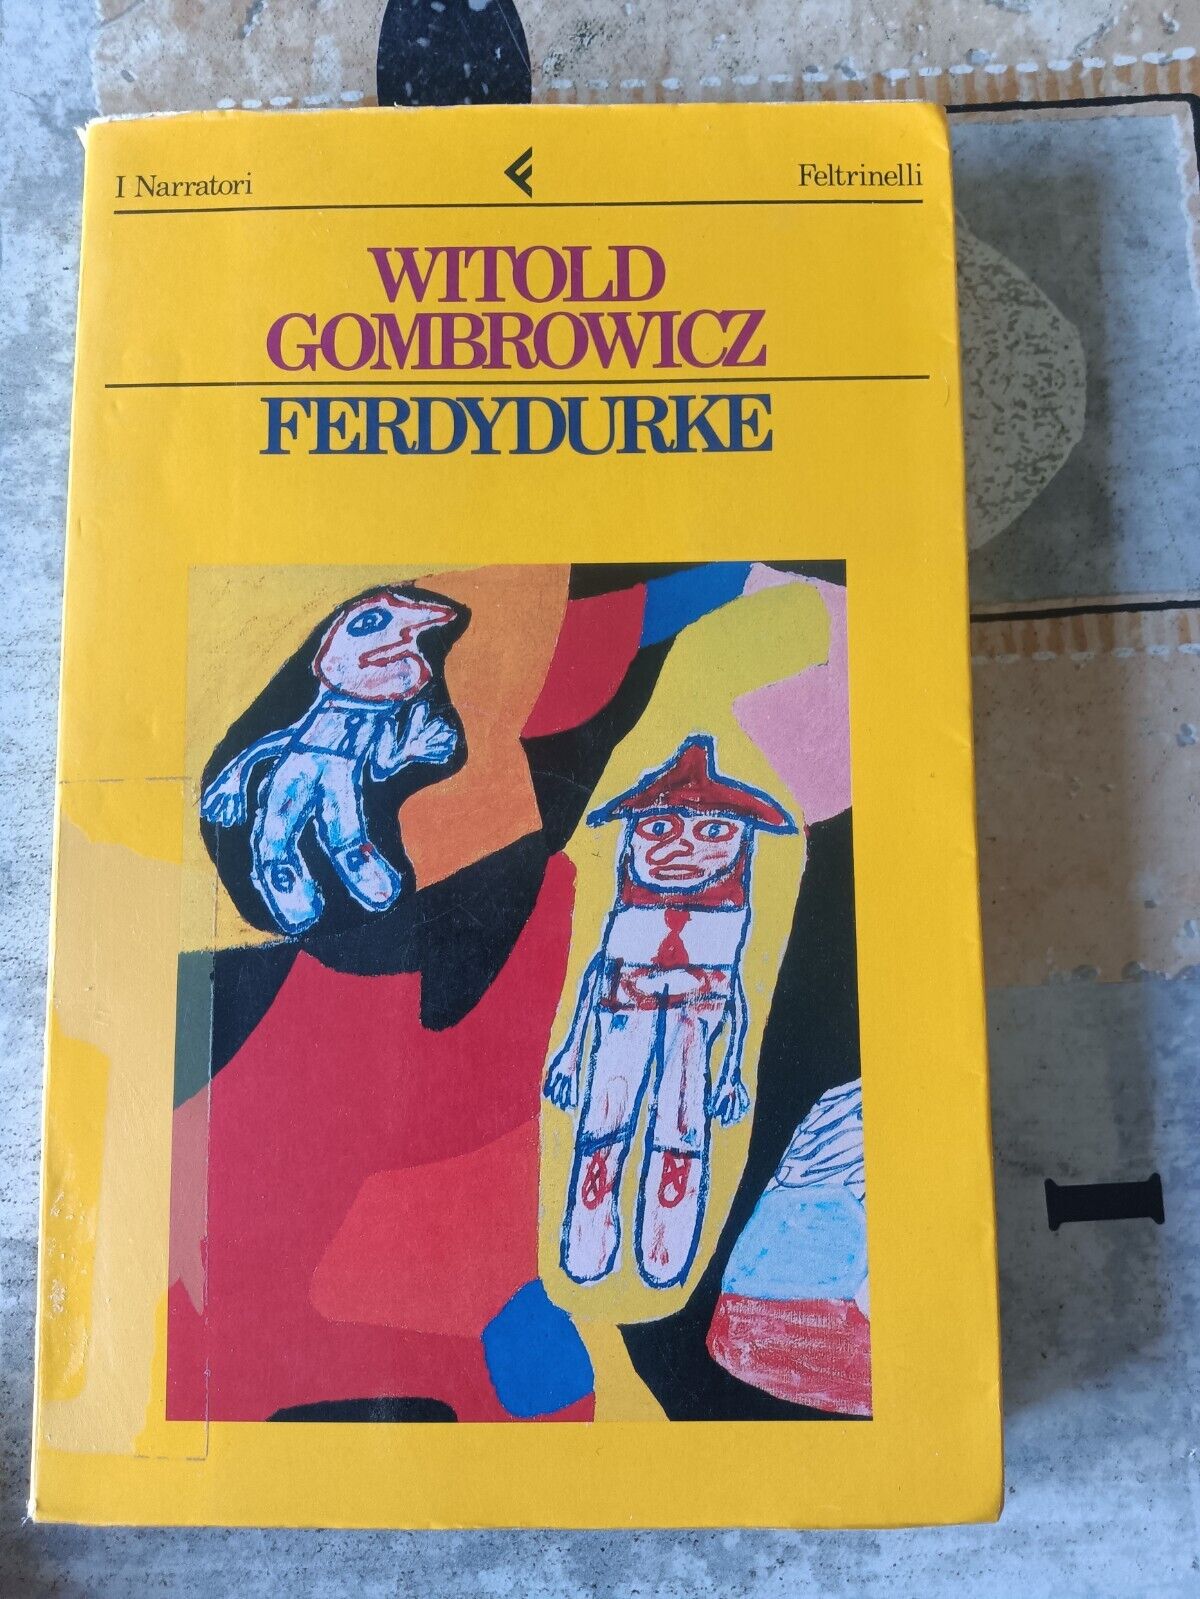 Ferdydurke | Witold Gombrowicz - Feltrinelli